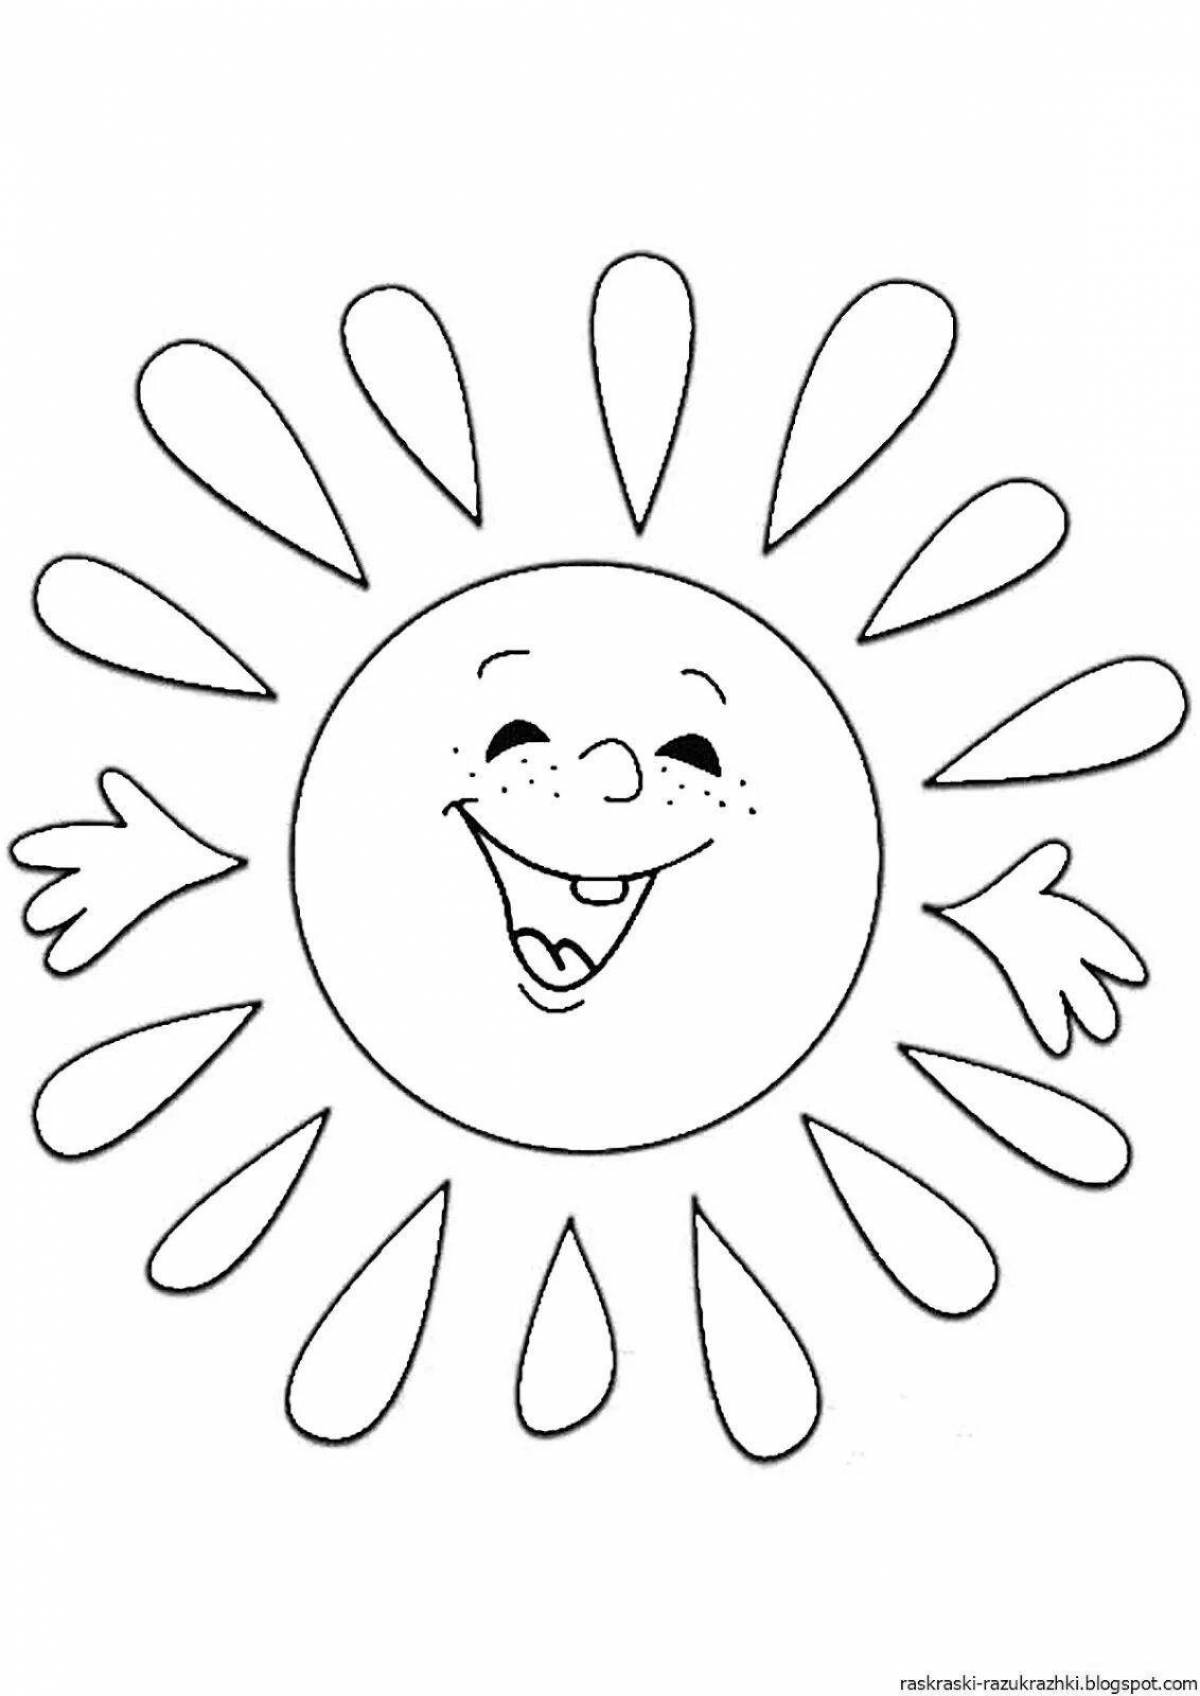 Забавная раскраска солнышко для детей